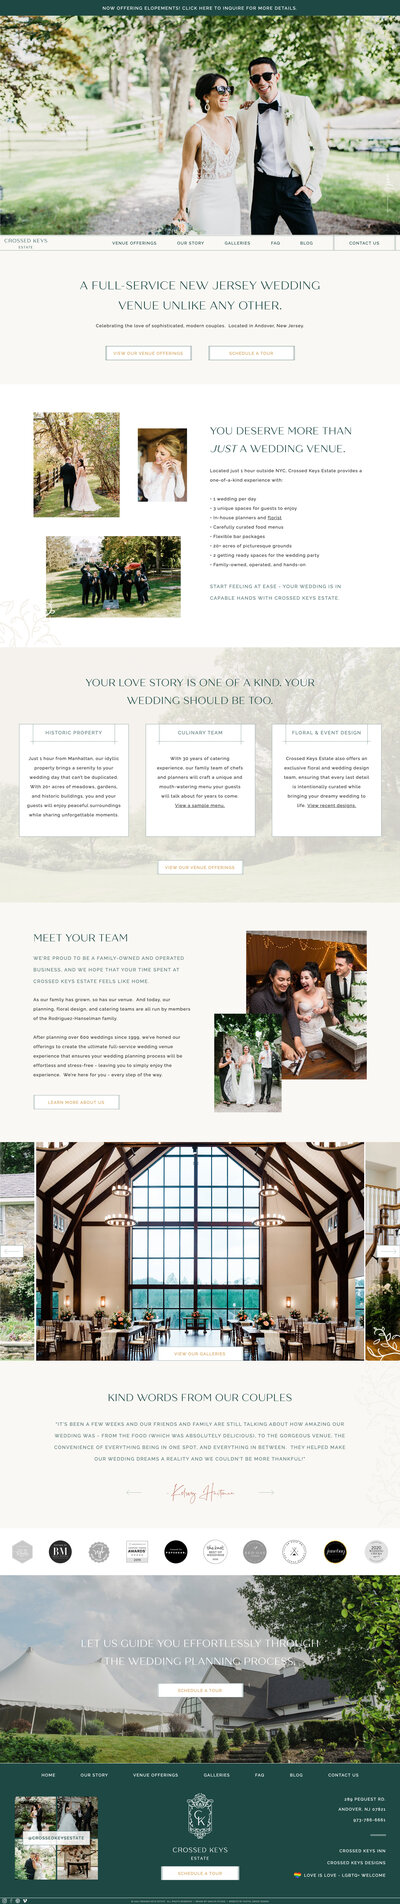 Custom Showit website for Crossed Keys Estate, a New Jersey wedding venue